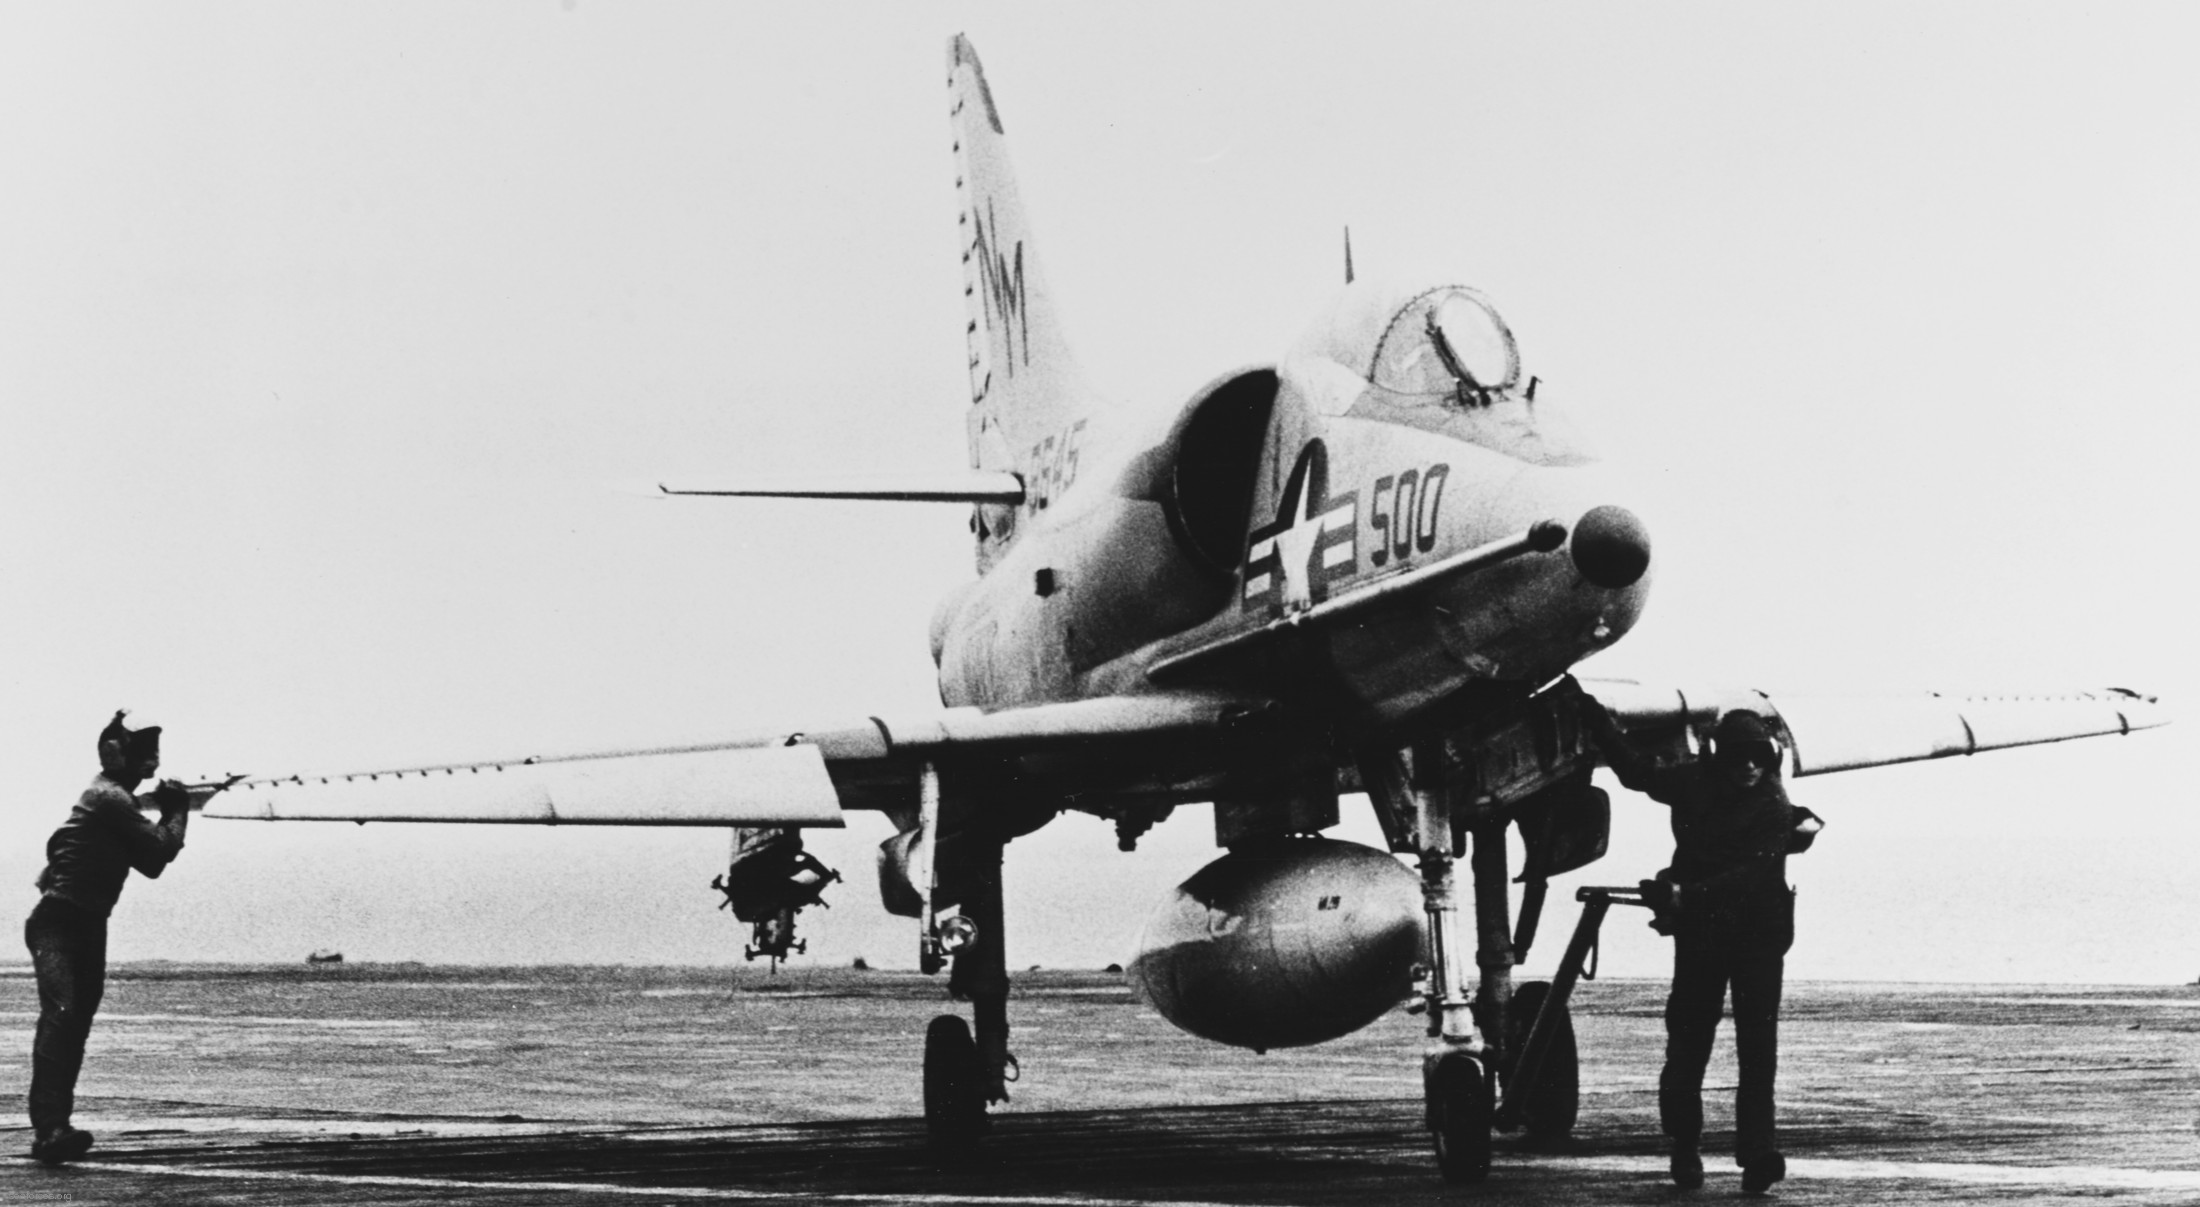 va-195 dambusters attack squadron a-4c skyhawk carrier air wing cvw-19 uss ticonderoga cva-14 15